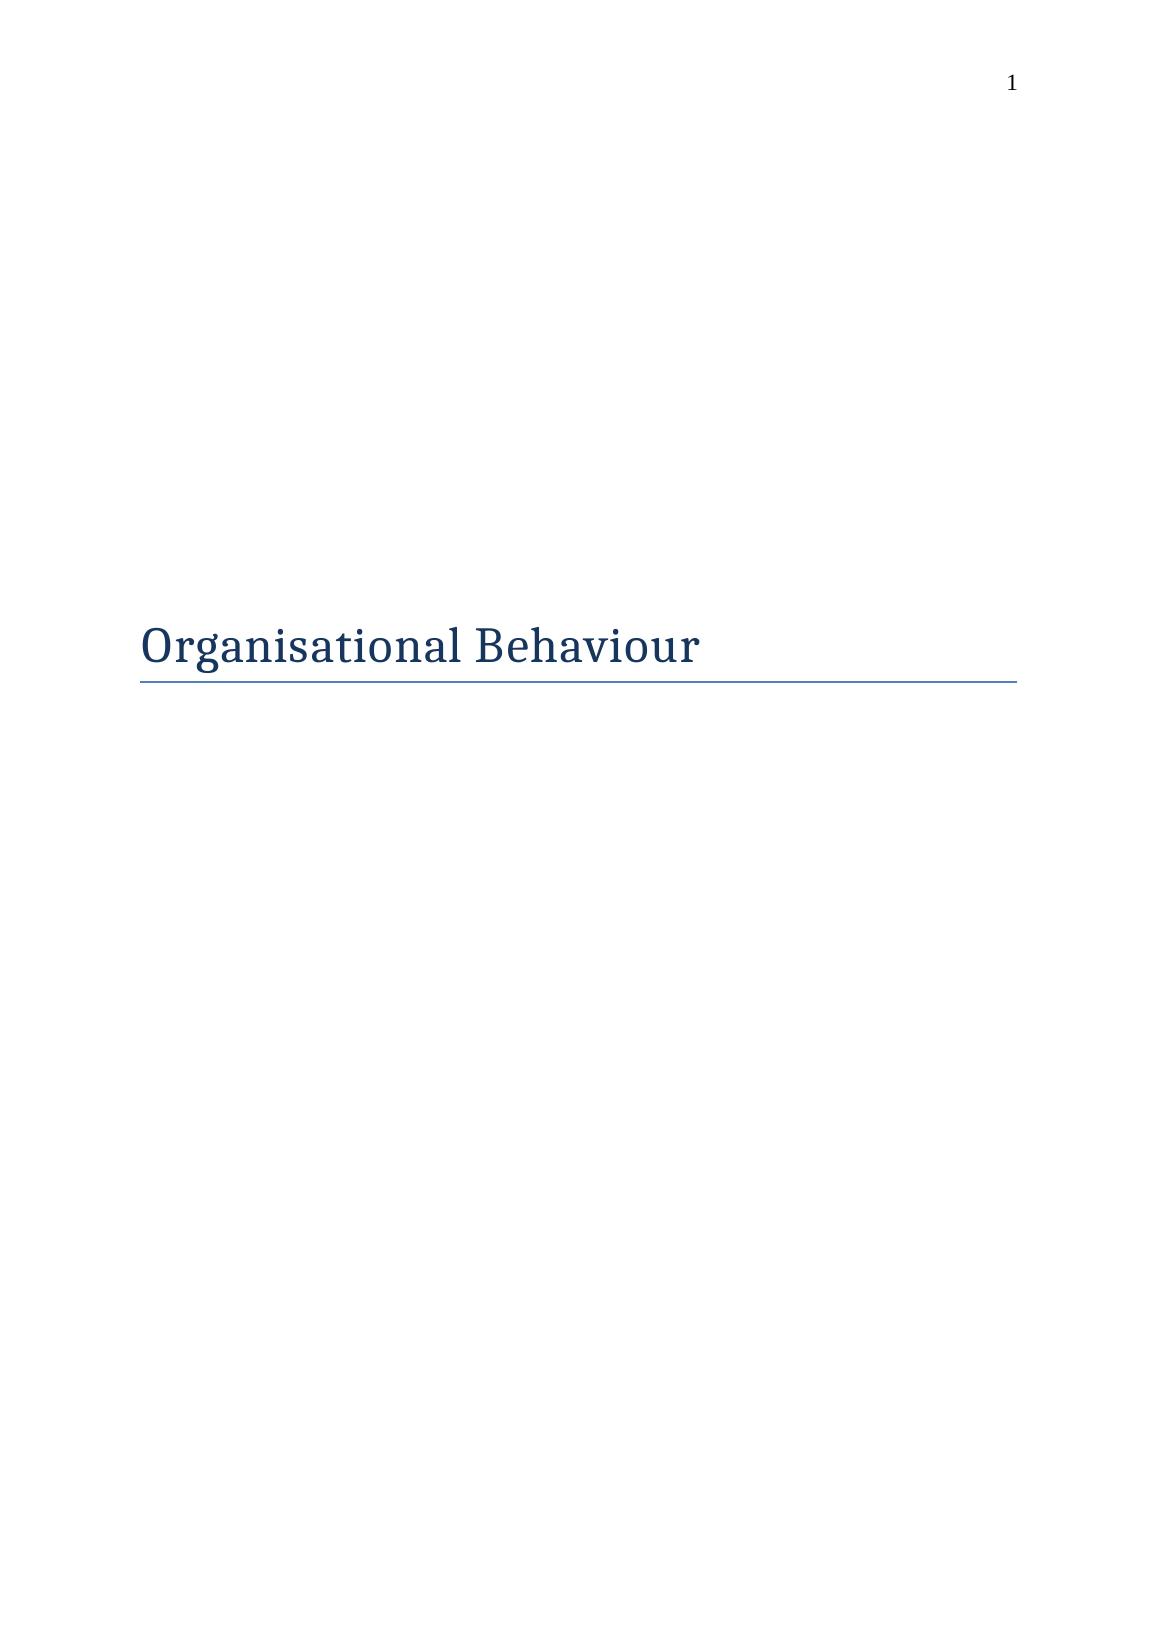 Essay on Organisational Behaviour_1